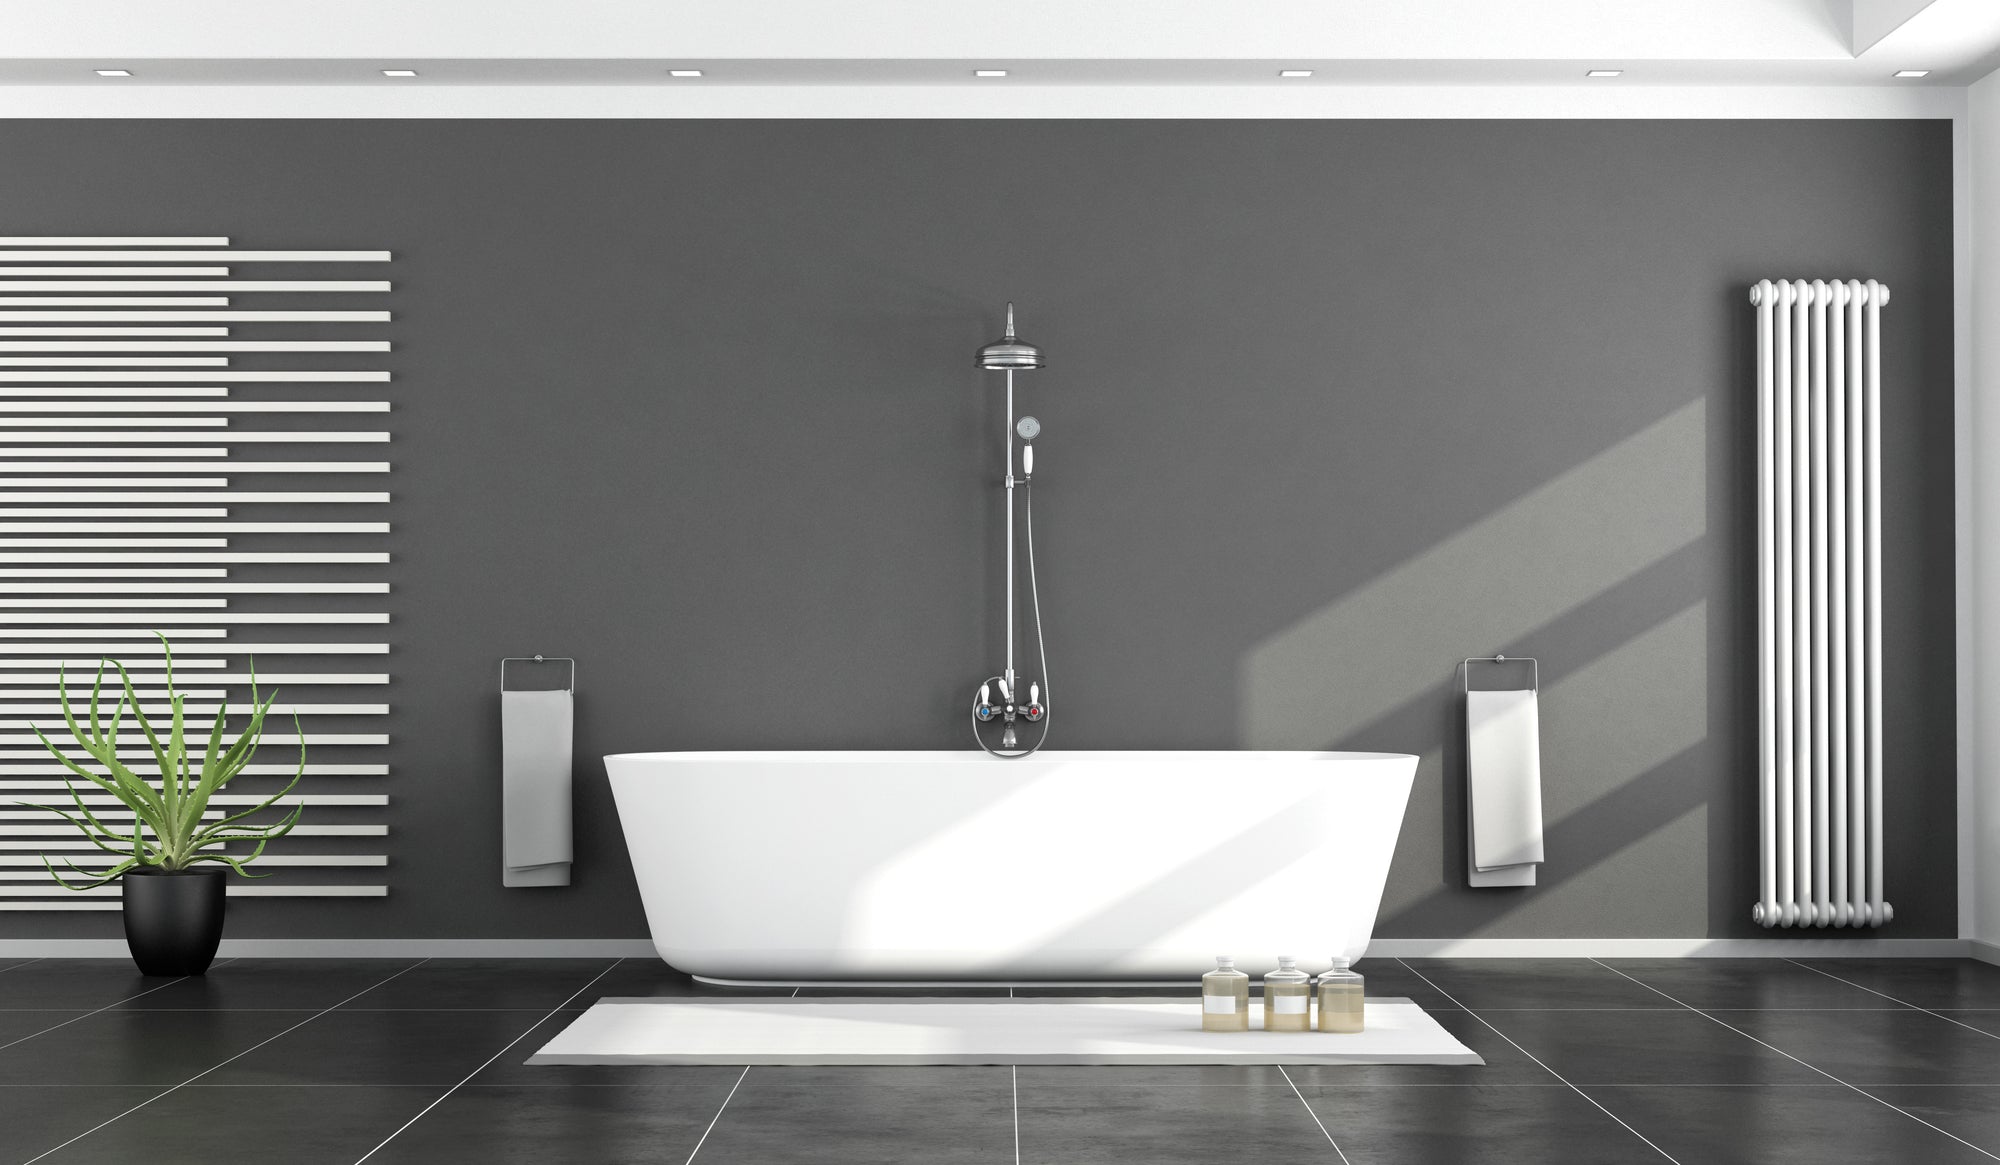 Luxury spacious bathroom with chrome shower kit, white freestanding bath, black tiled floor, white vertical radiator and dark painted wall.